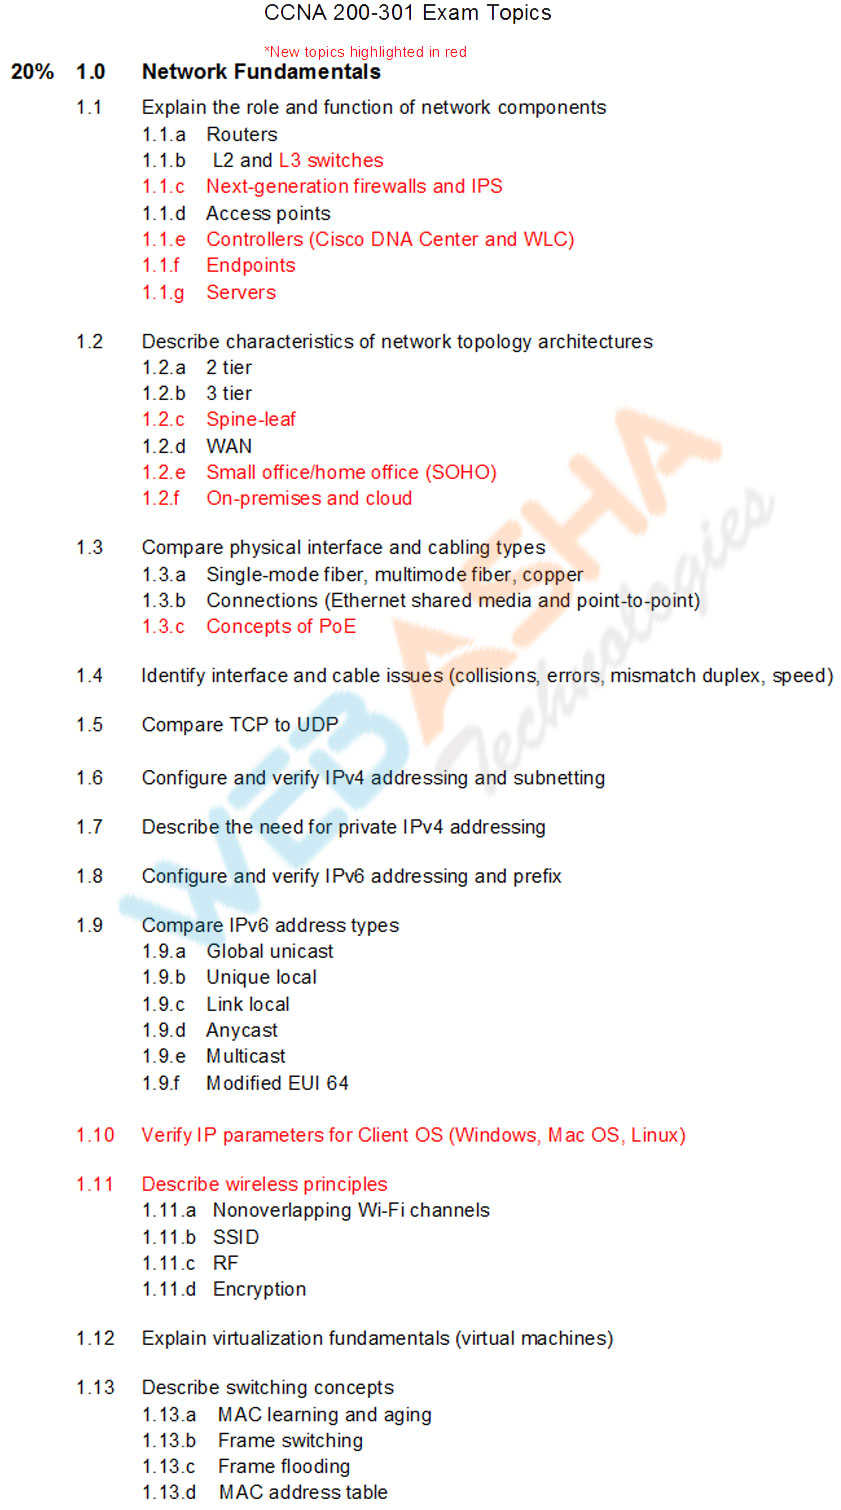 CCNA 200 - 301 syllabus